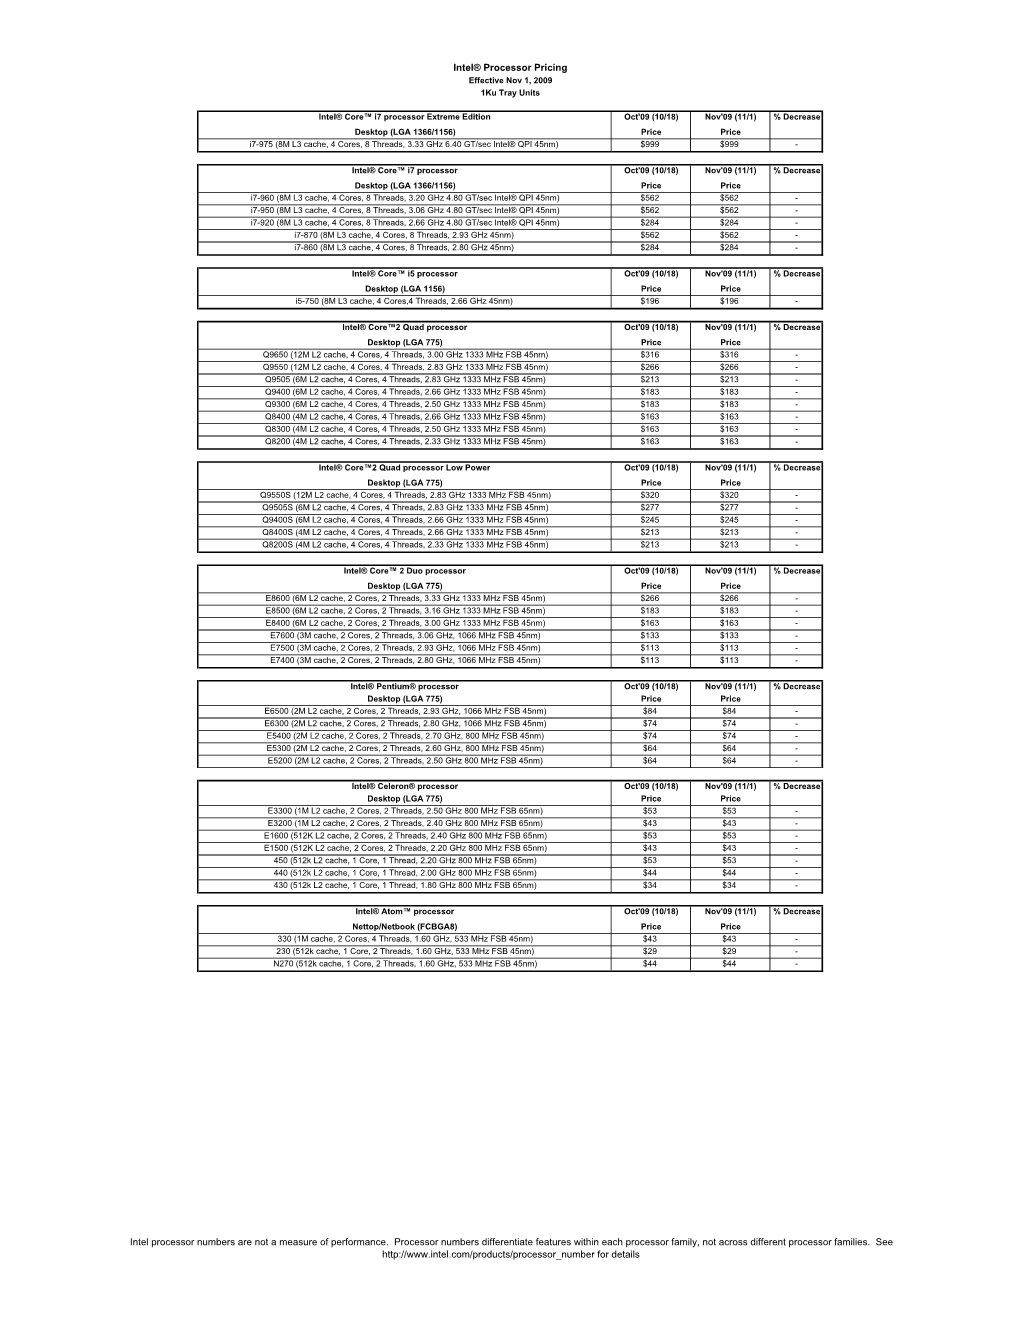 Intel Price List, November 2009